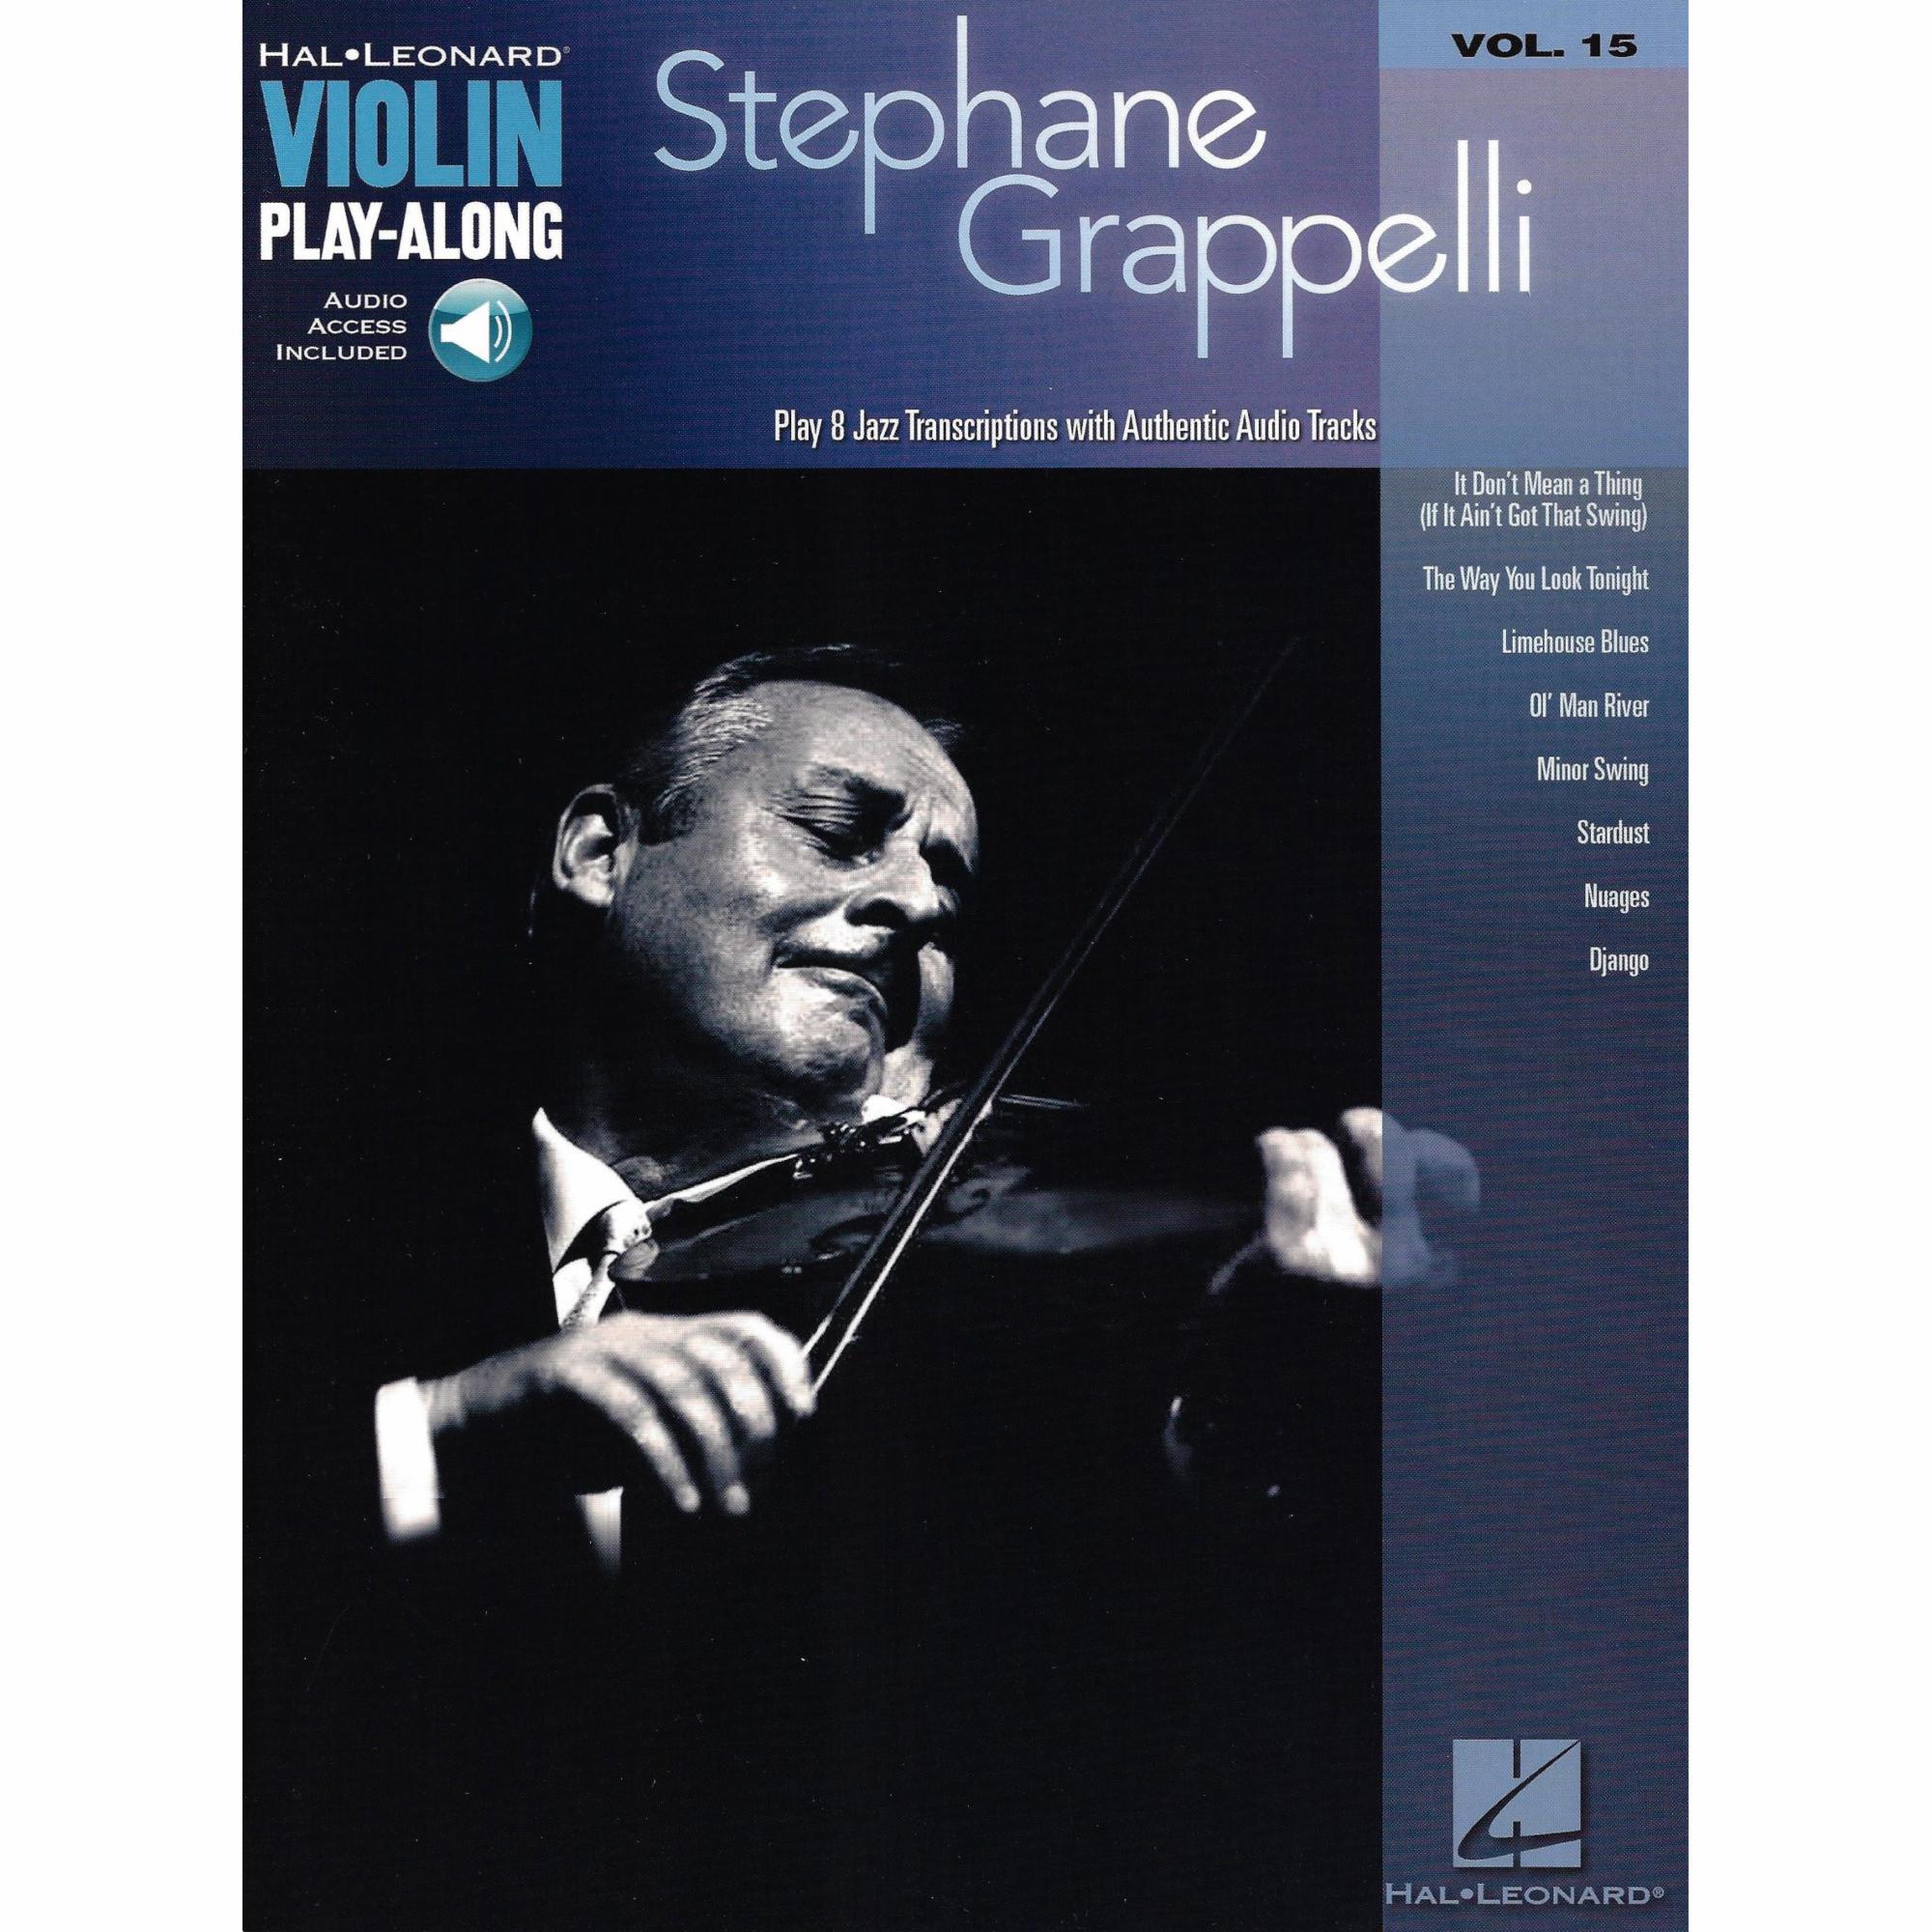 Stephane Grappelli for Violin